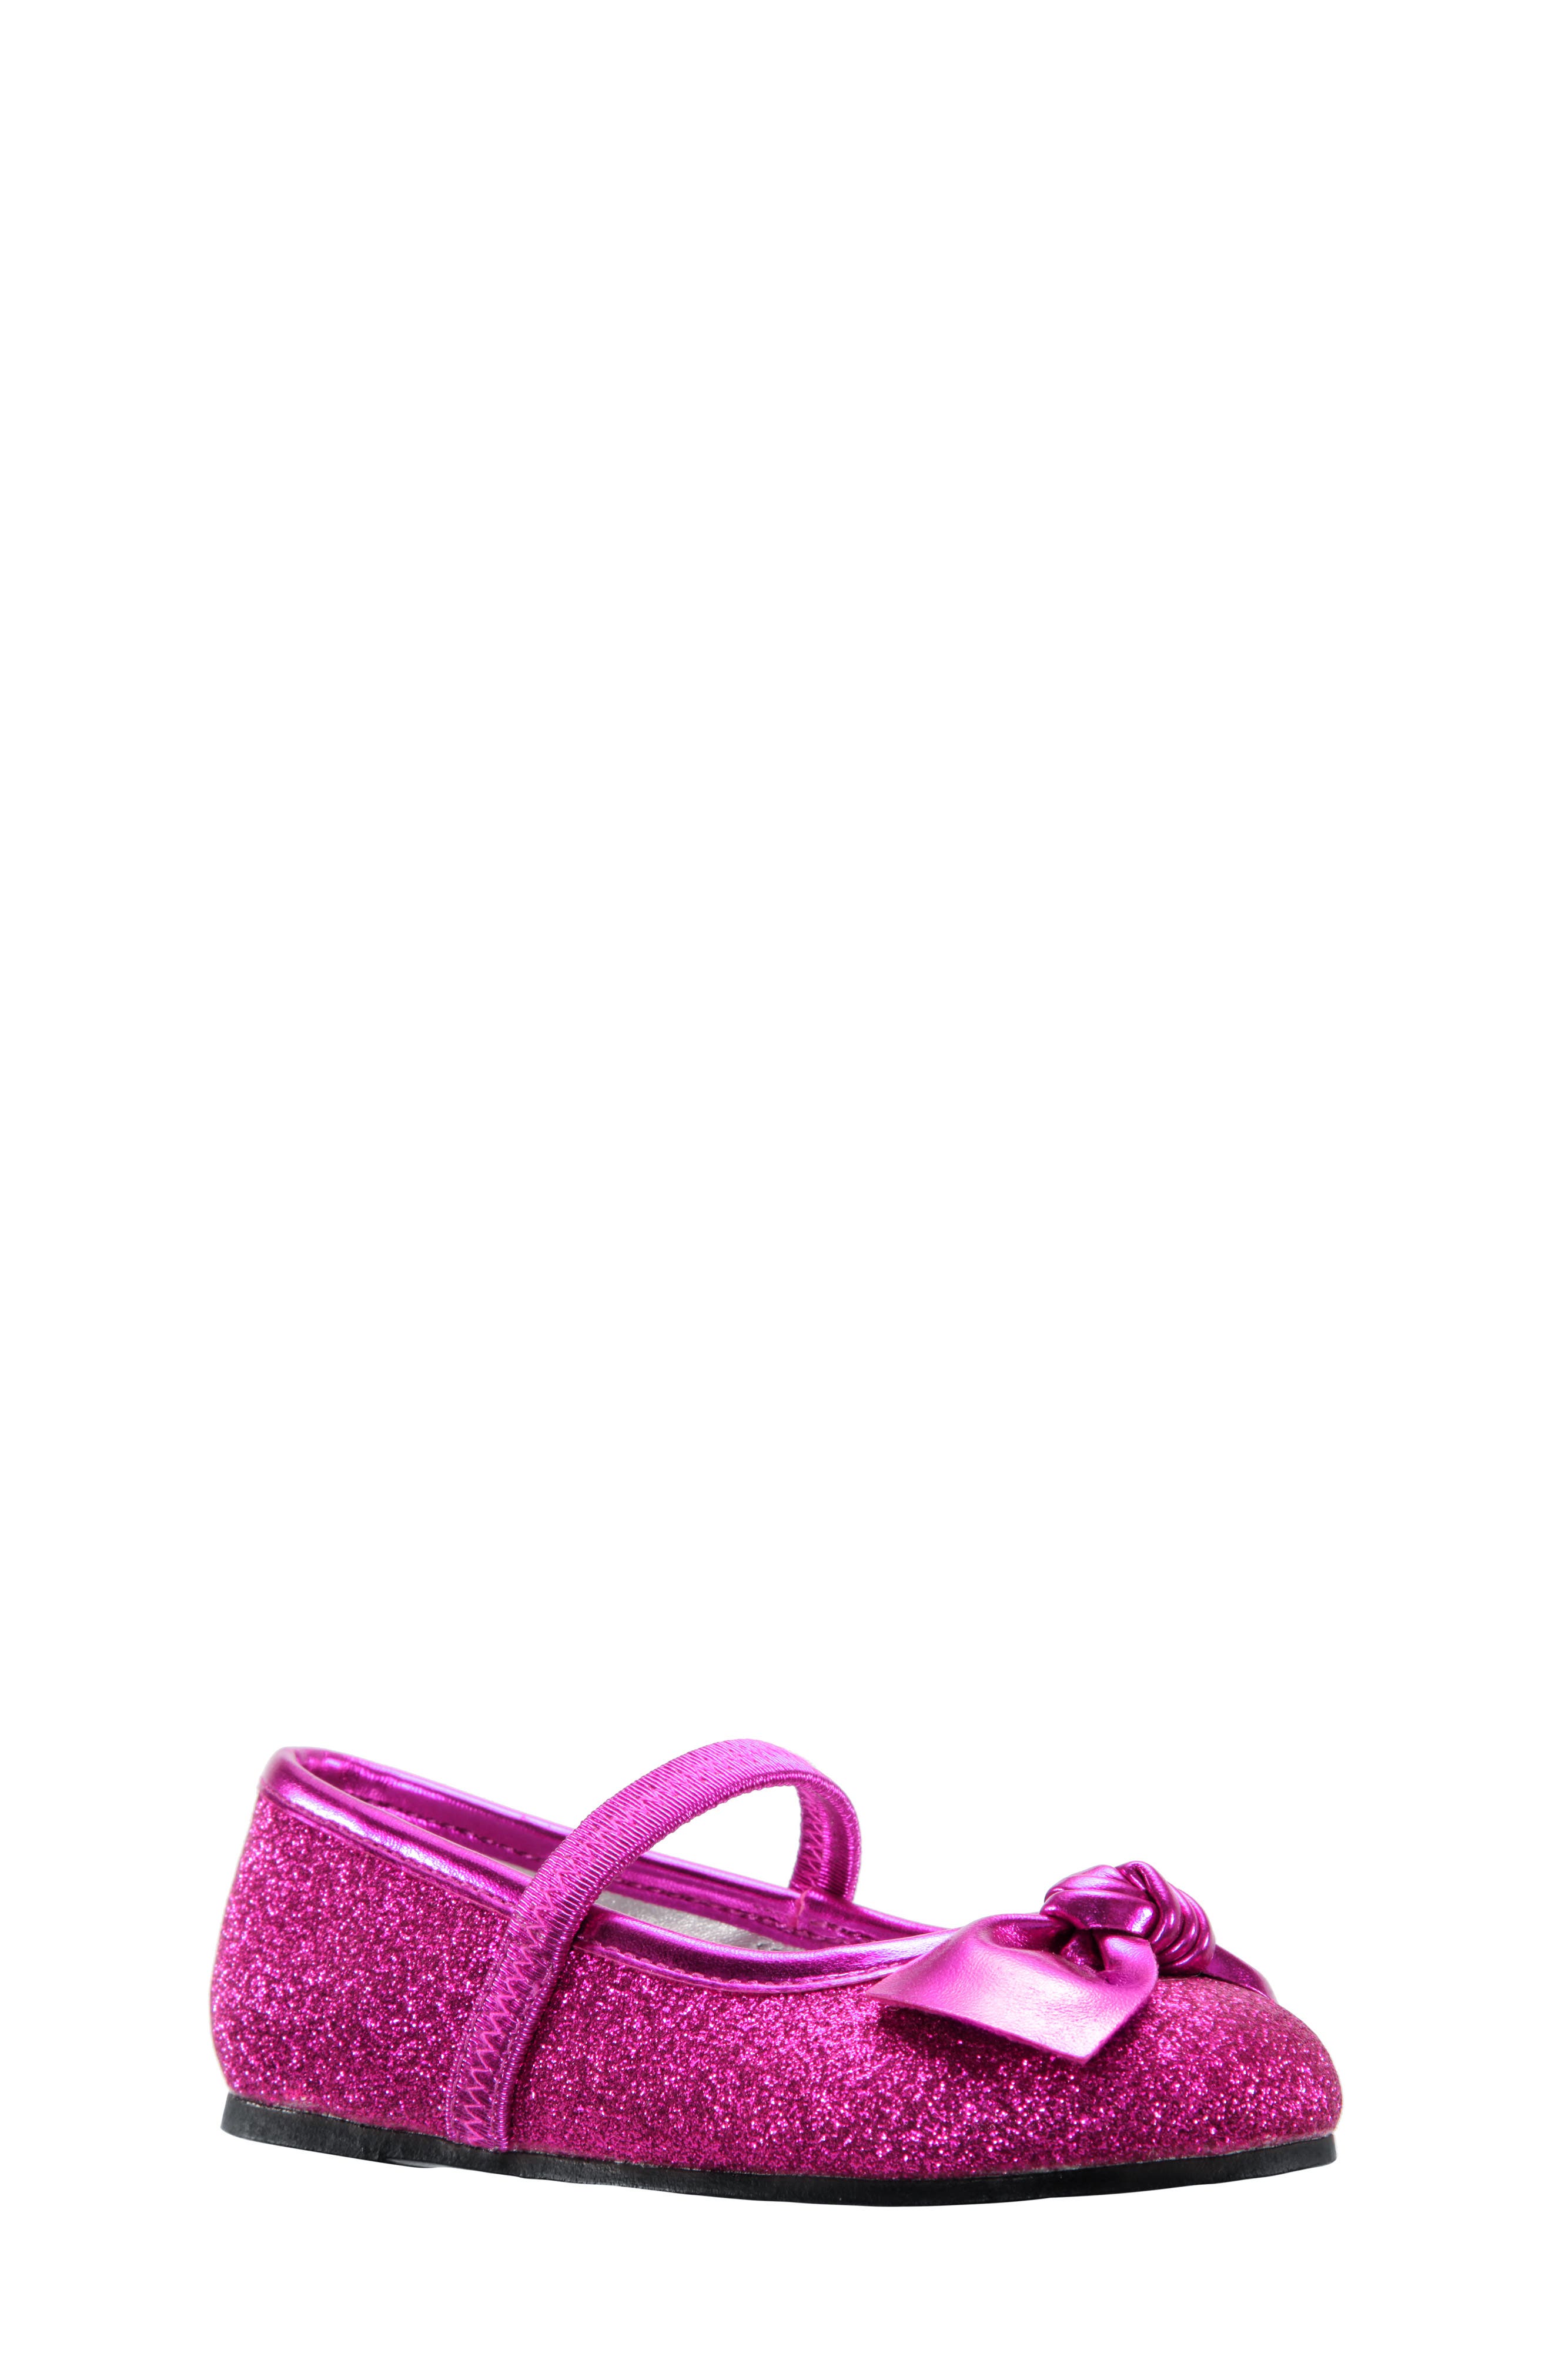 UPC 794378369141 product image for Toddler Girl's Nina Larabeth-T Glitter Bow Ballet Flat, Size 8 M - Pink | upcitemdb.com